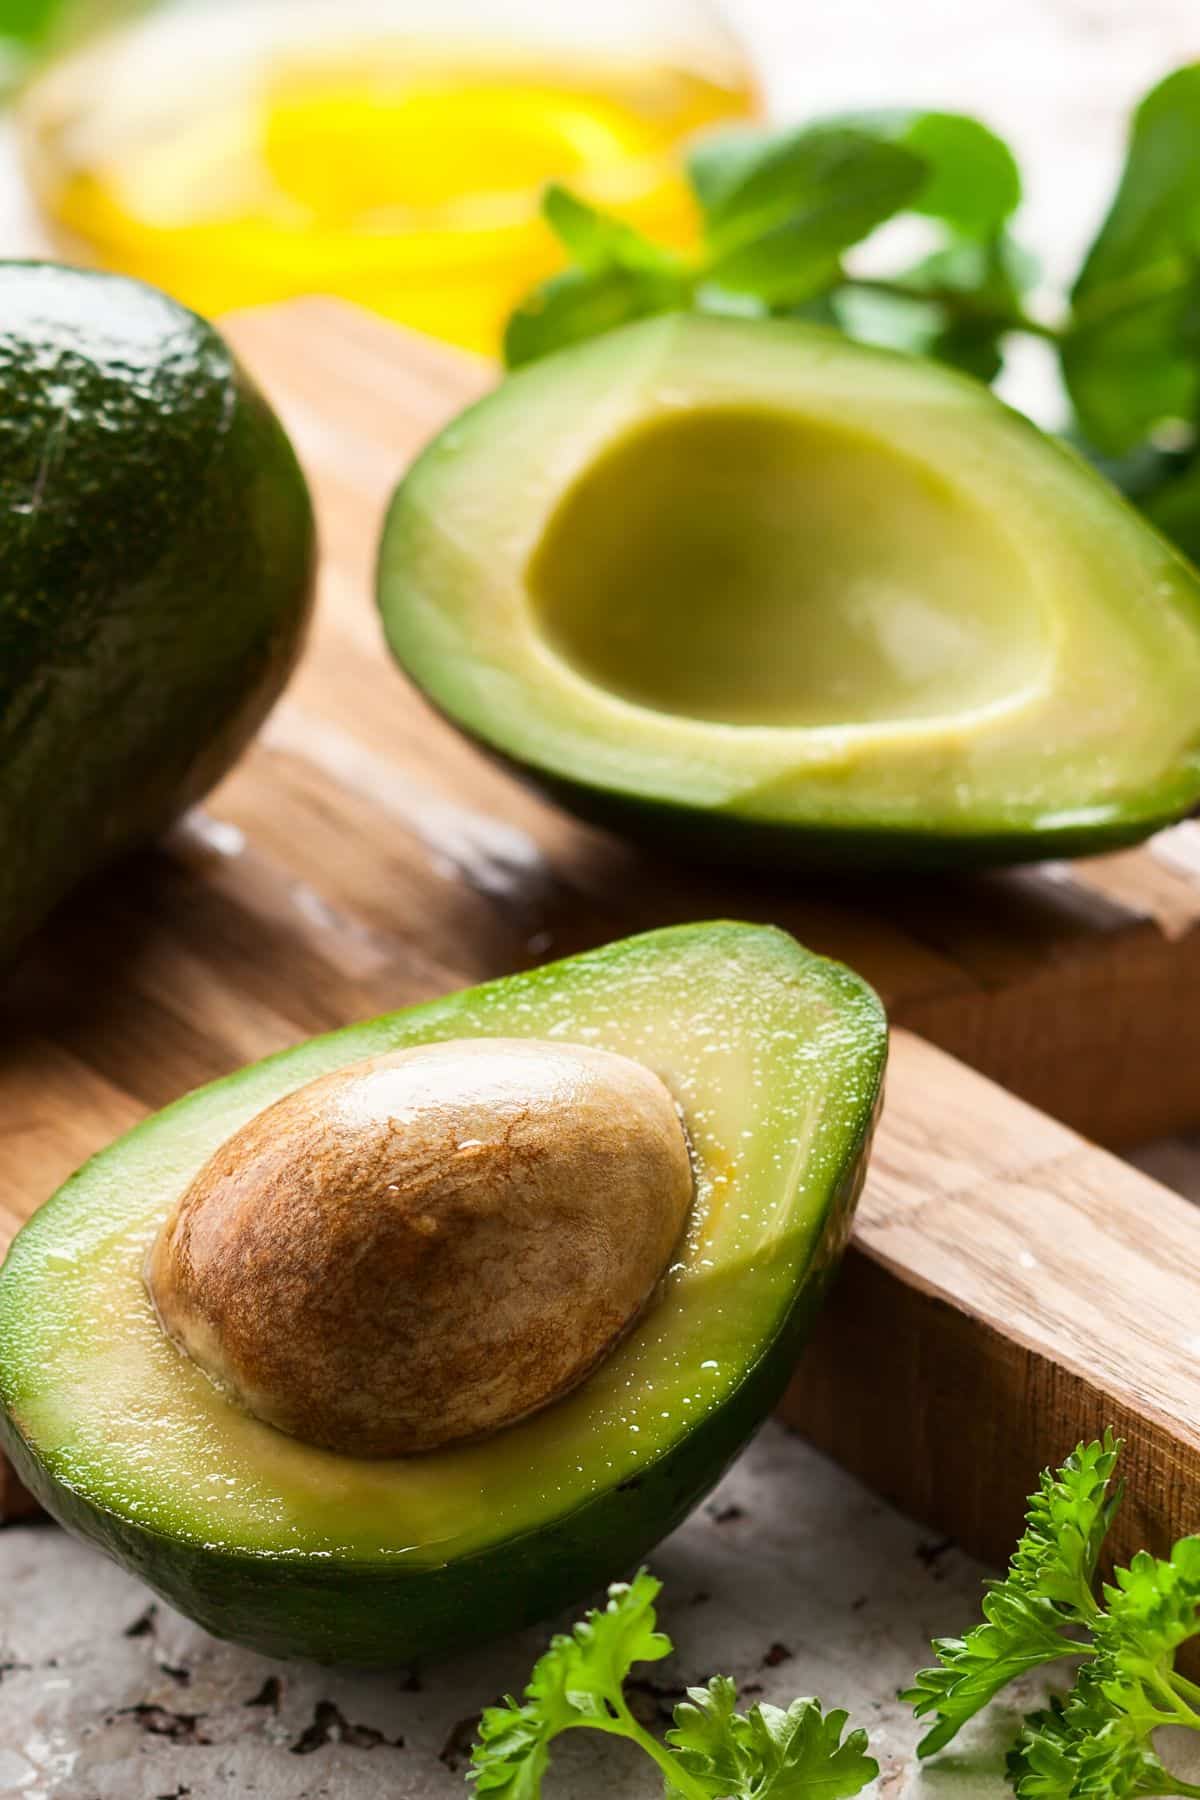 avocado cut in half on table.